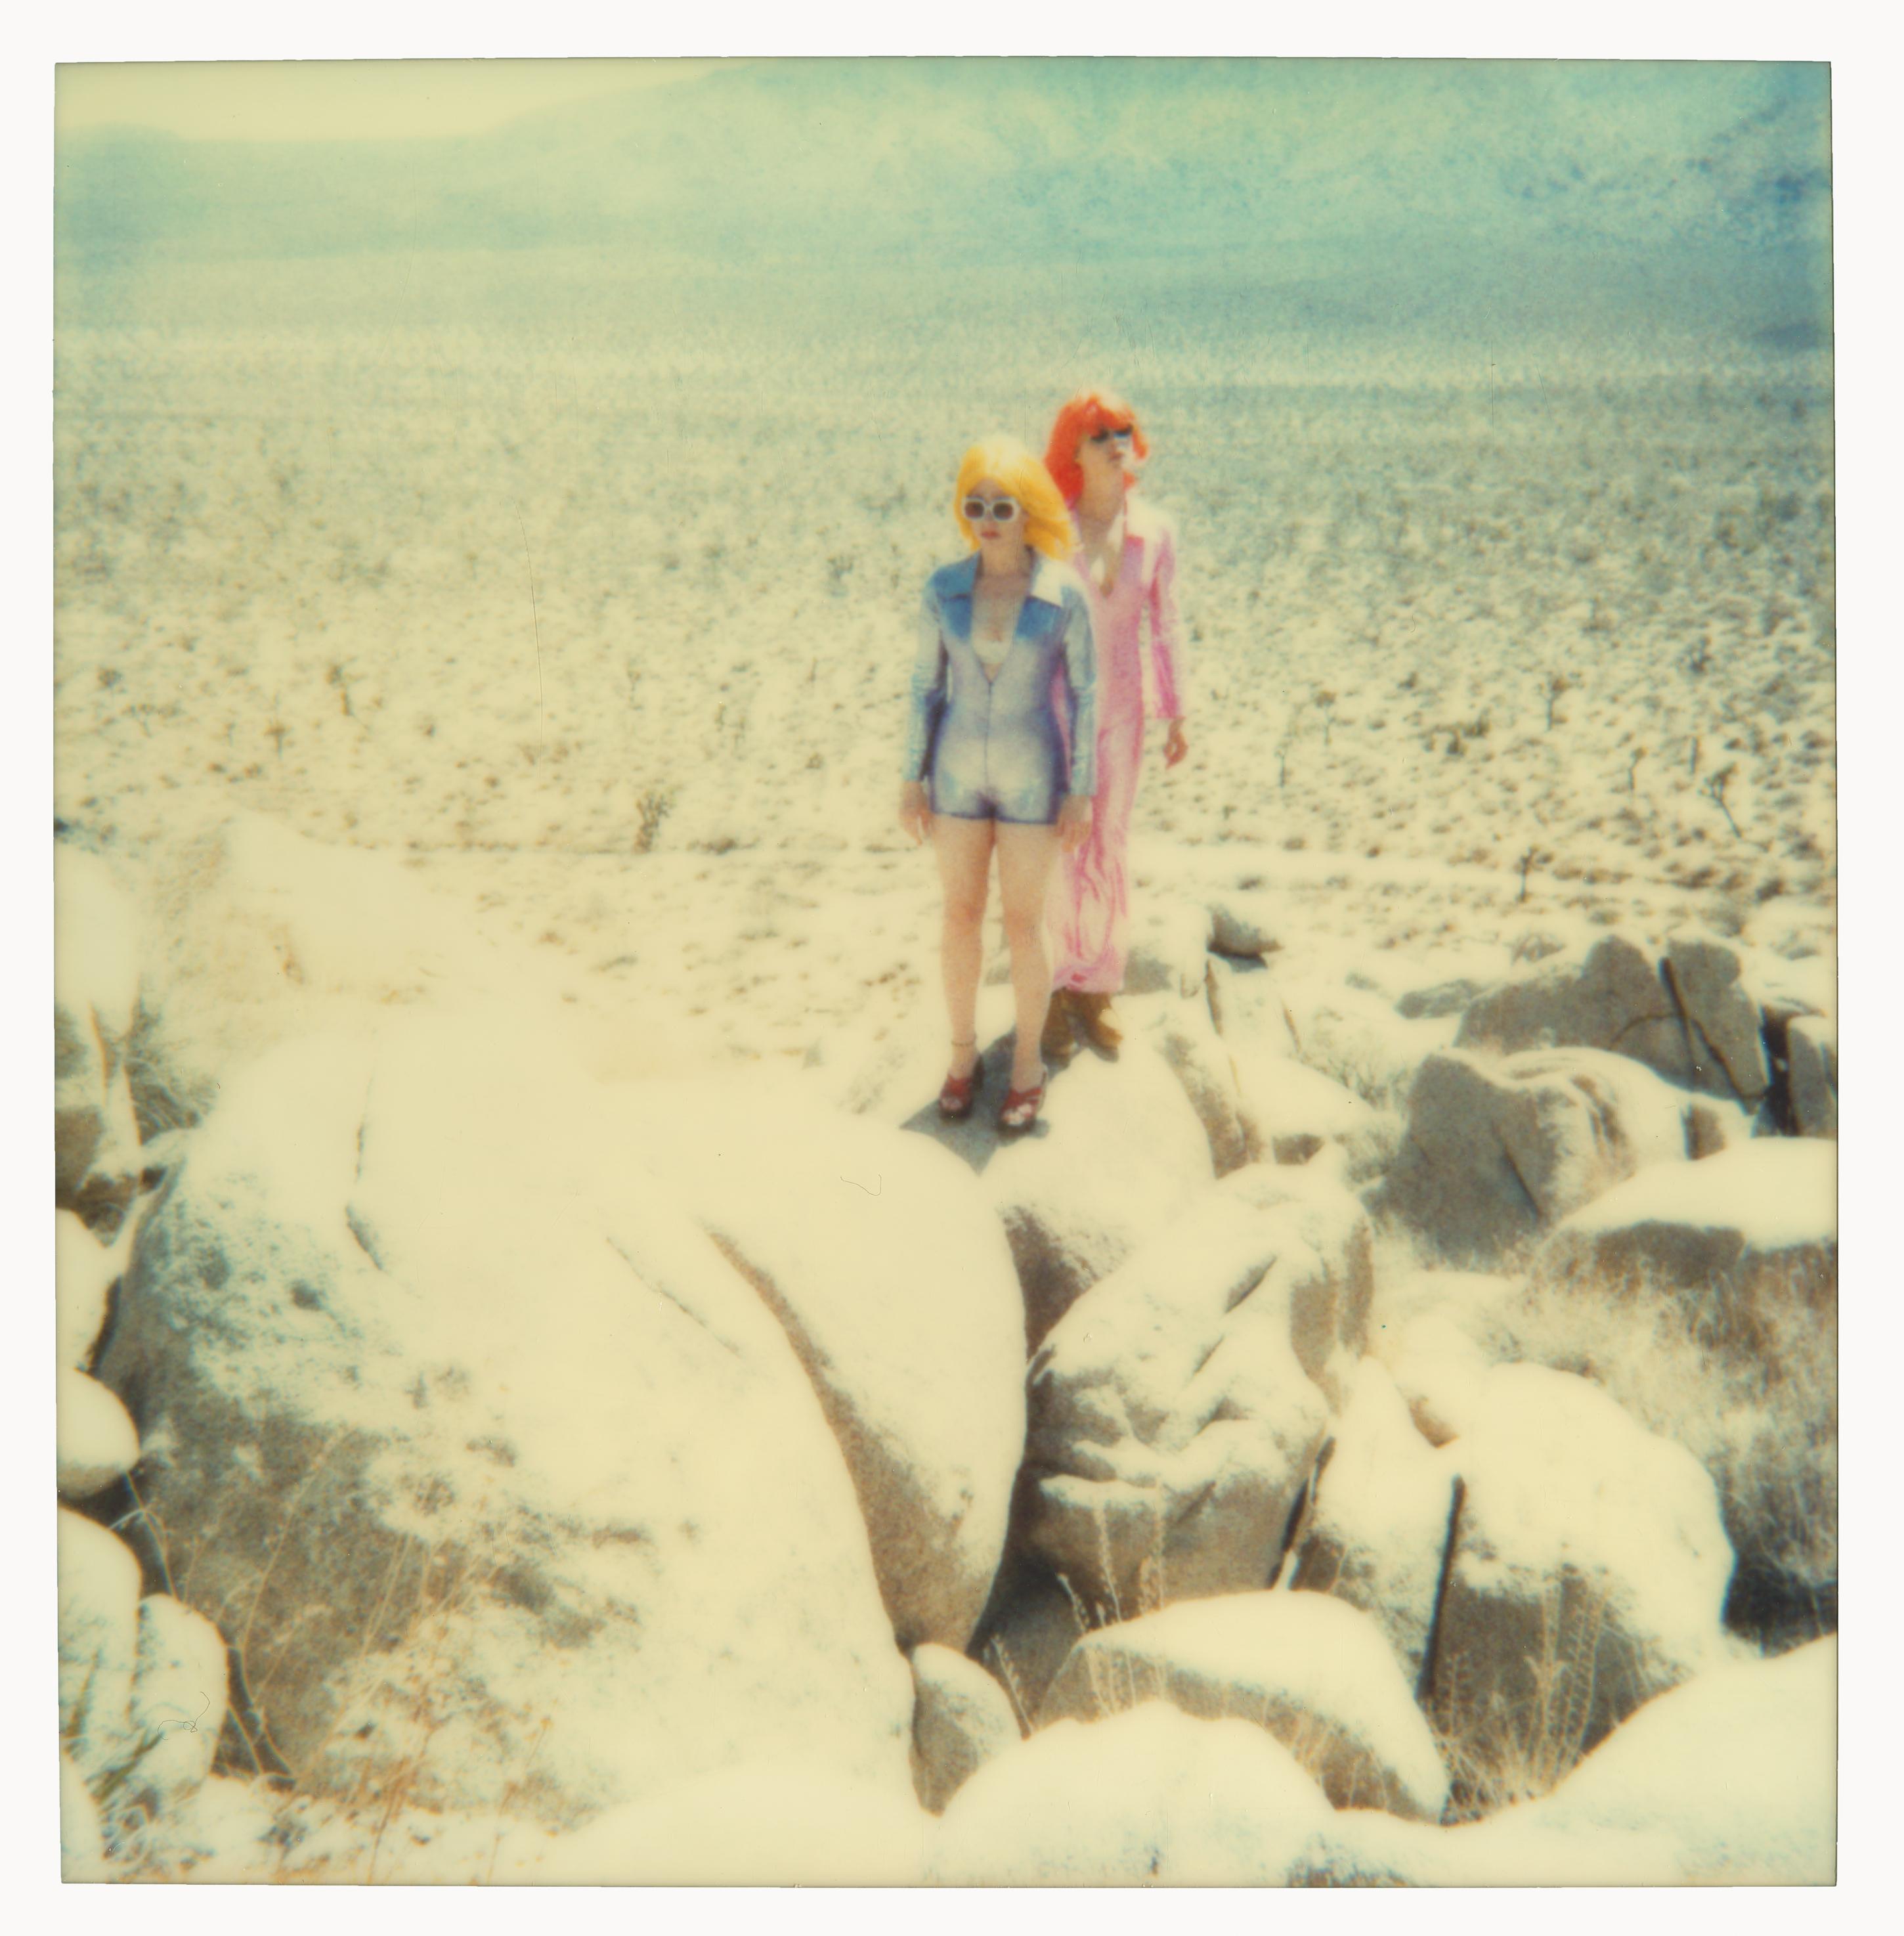 Stefanie Schneider Portrait Photograph - On the Rocks (Long Way Home) - 80x79cm